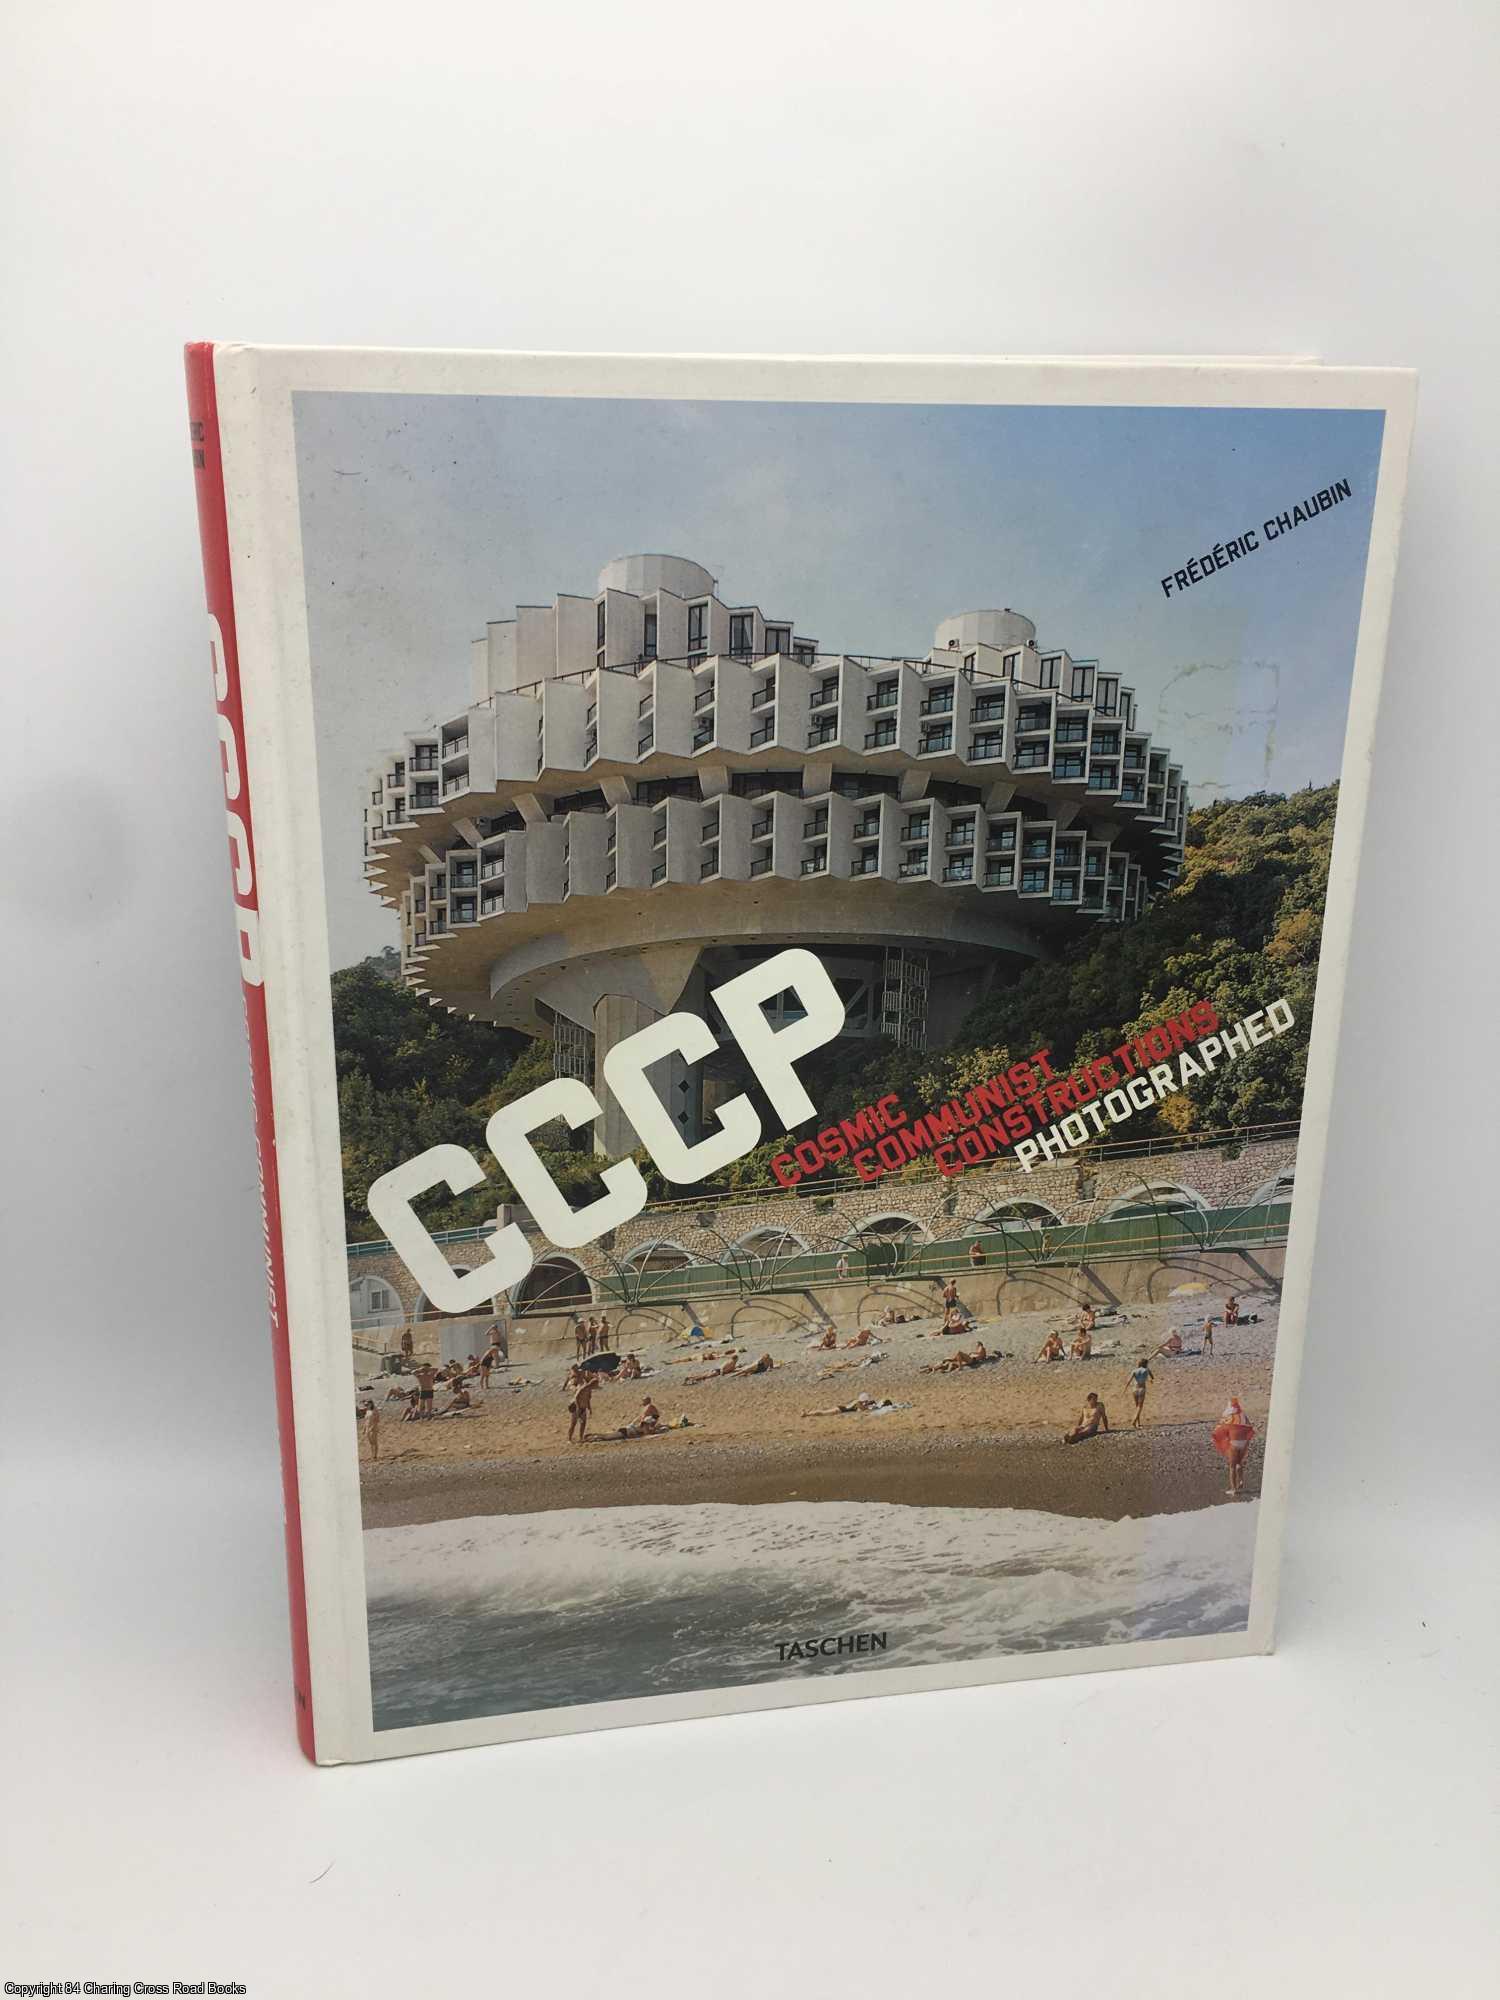 Chaubin, Frederic - CCCP: Cosmic Communist Constructions Photographed